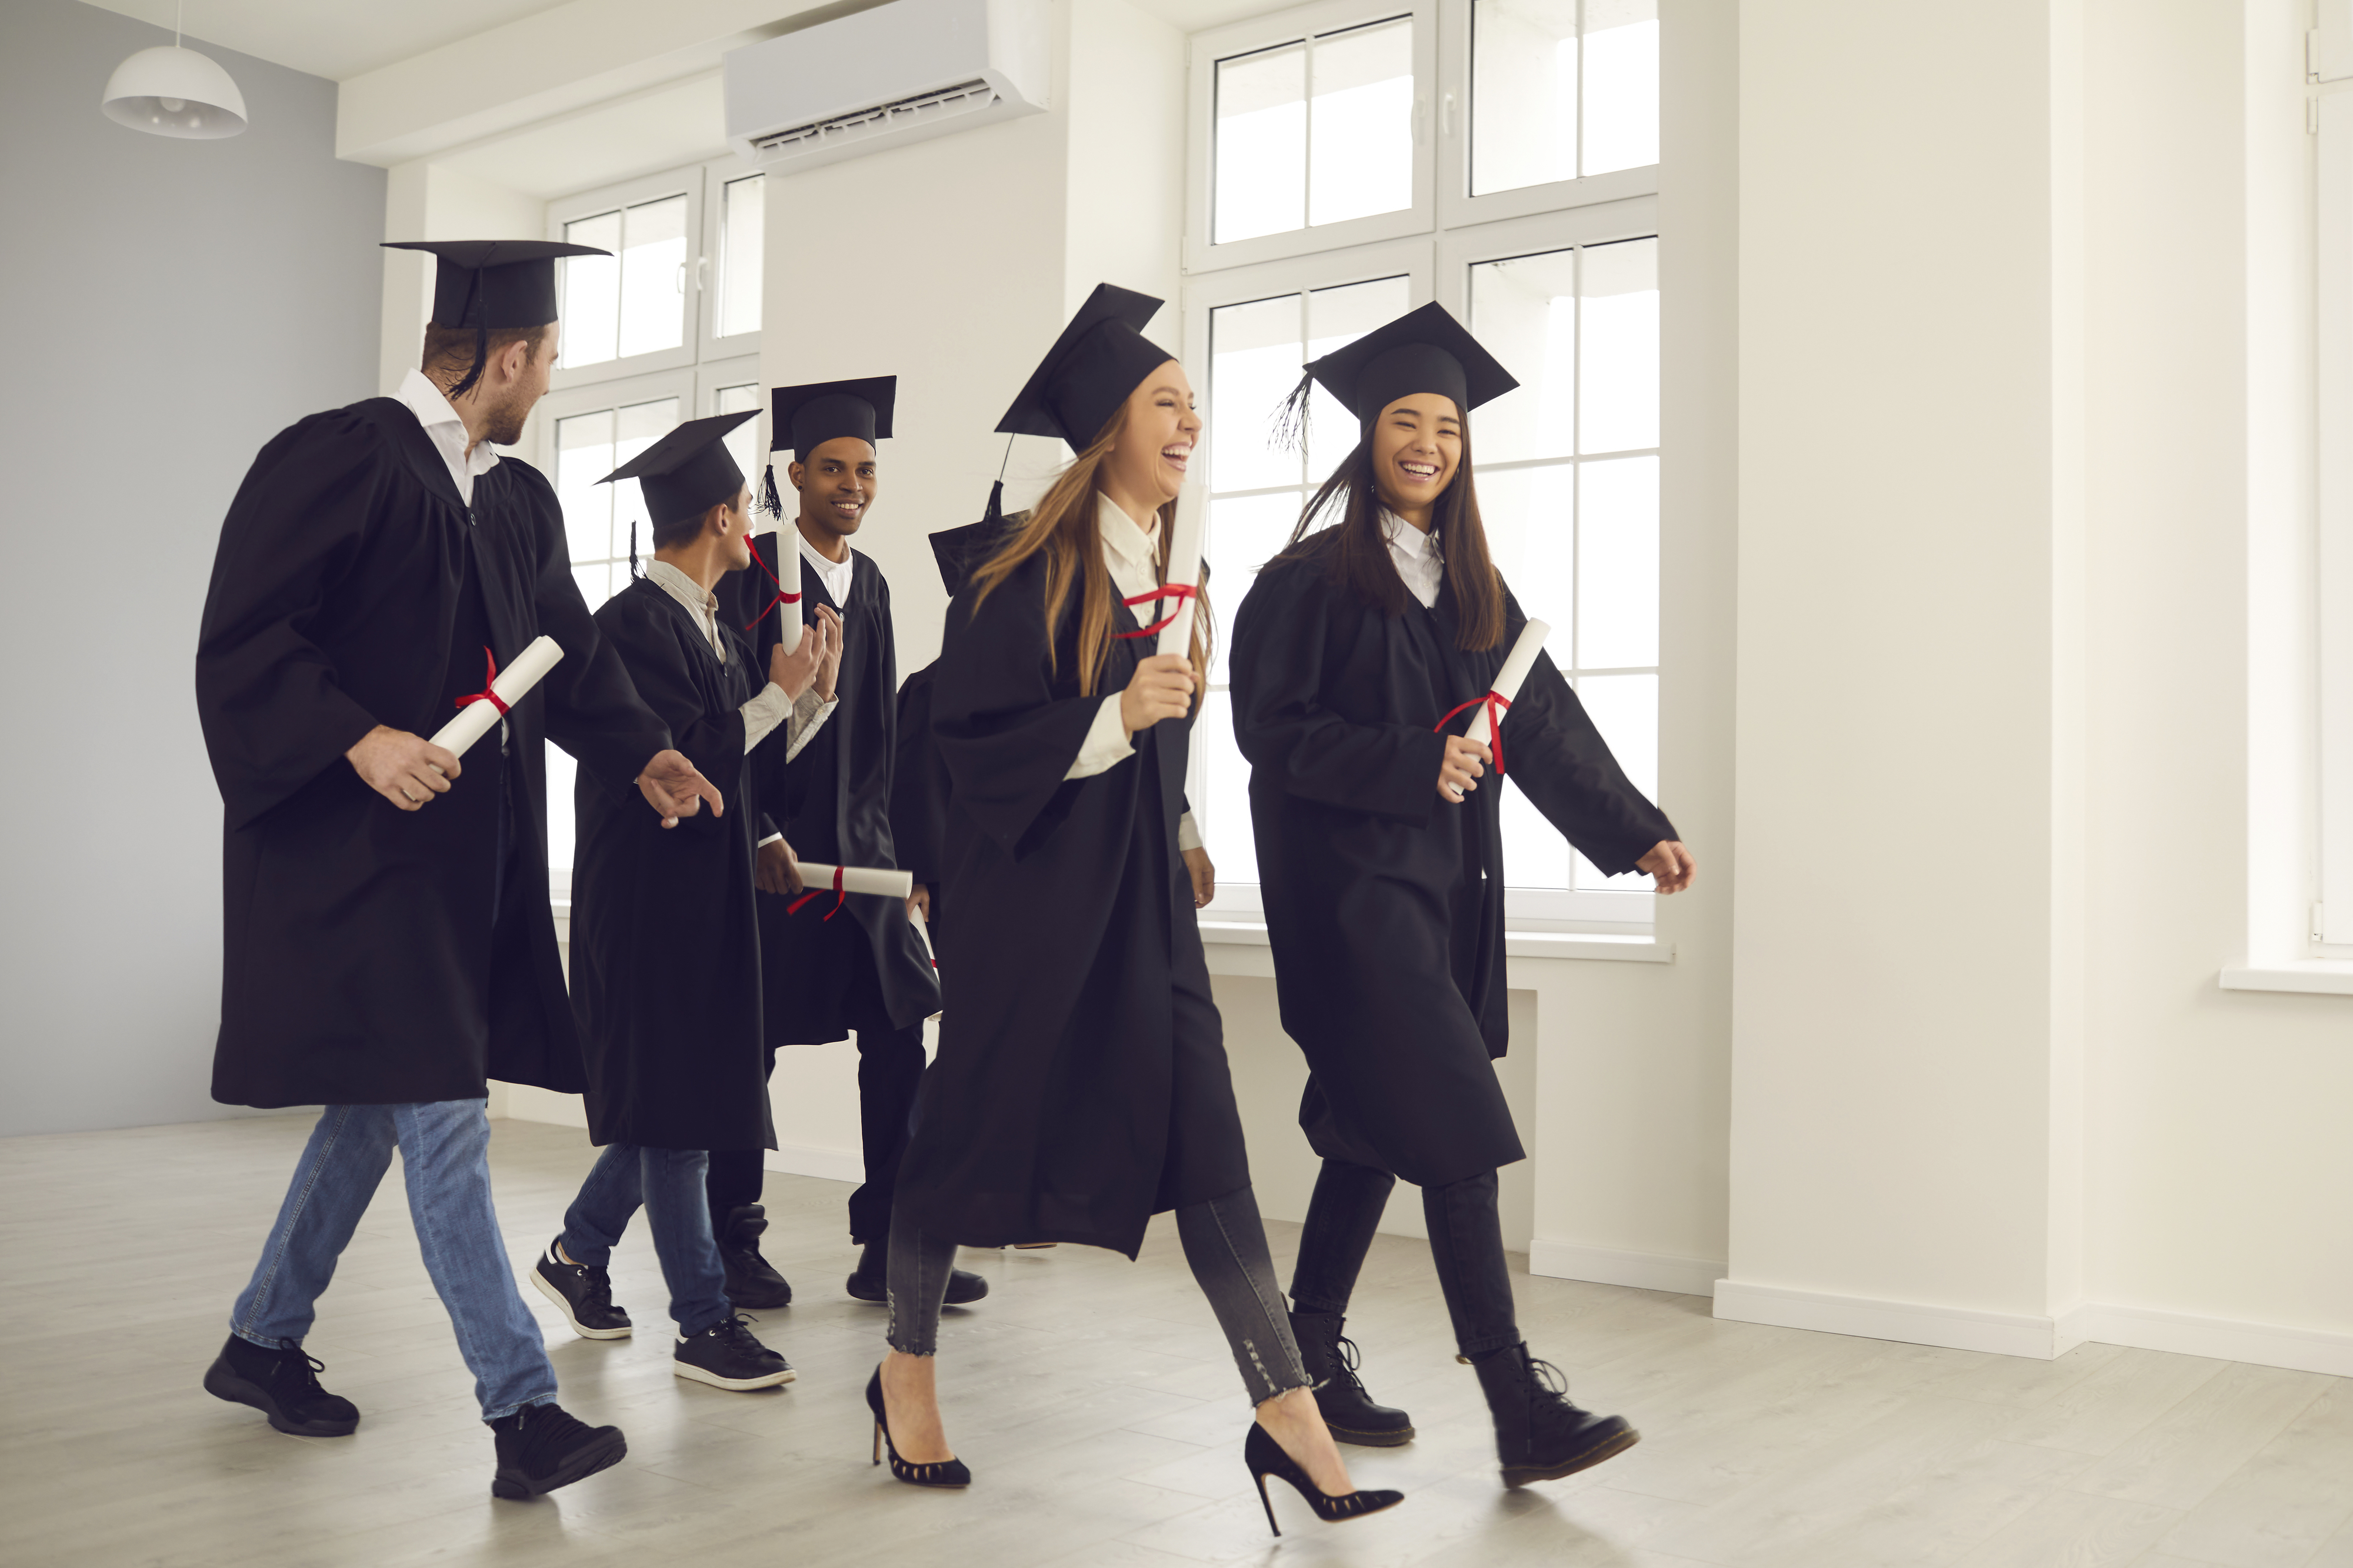 Graduates walking with their diplomas